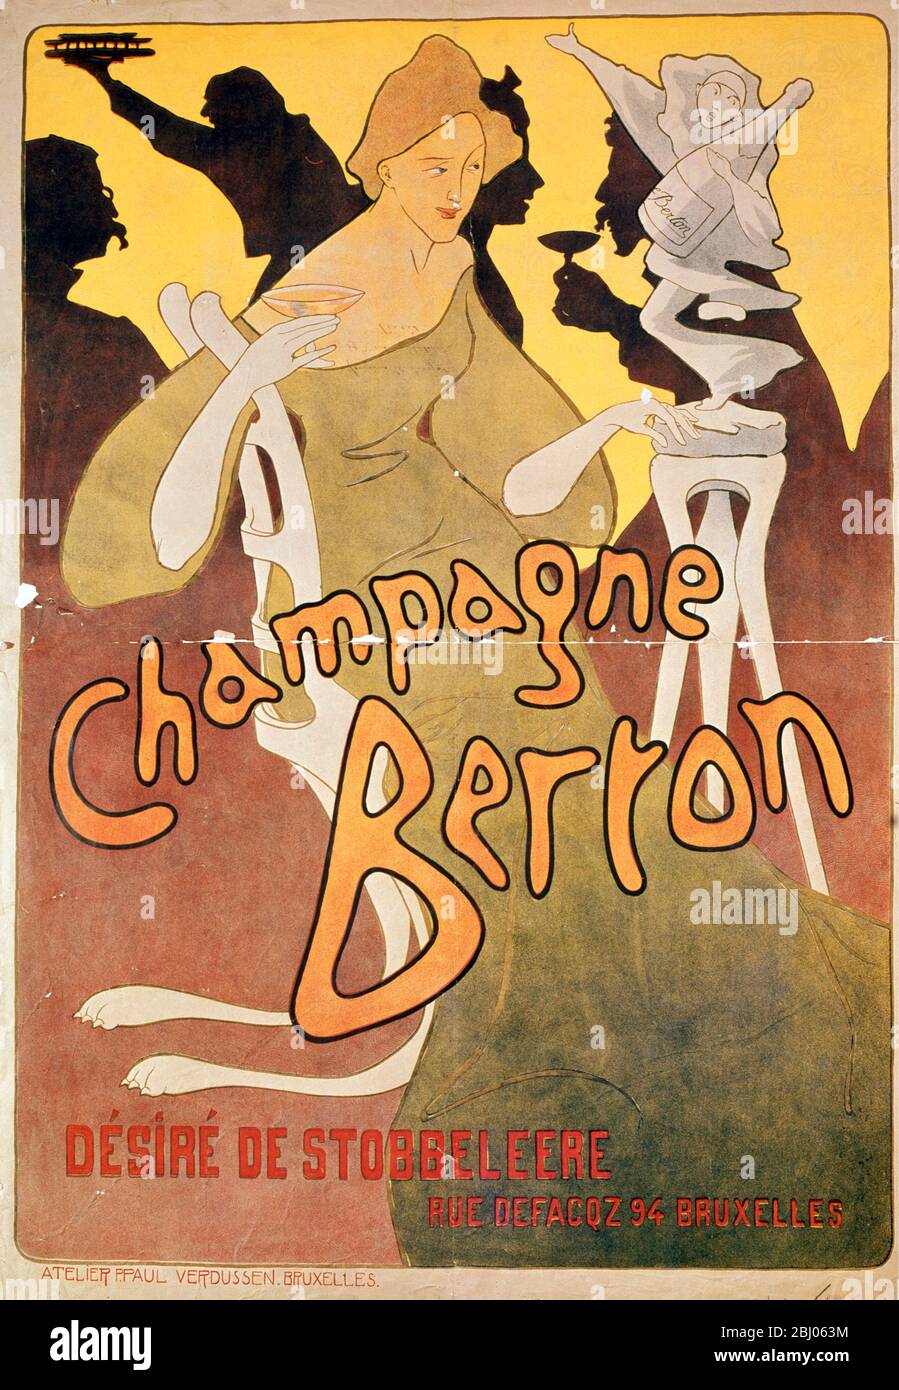 Champagne Berton, printed by Josse Goosens (1876-1929) c.1900 (coloured litho) - Artist Mignot, Victor (1872-1944) - leading Belgian poster artist - Location Victoria & Albert Museum, London, UK - - Stock Photo